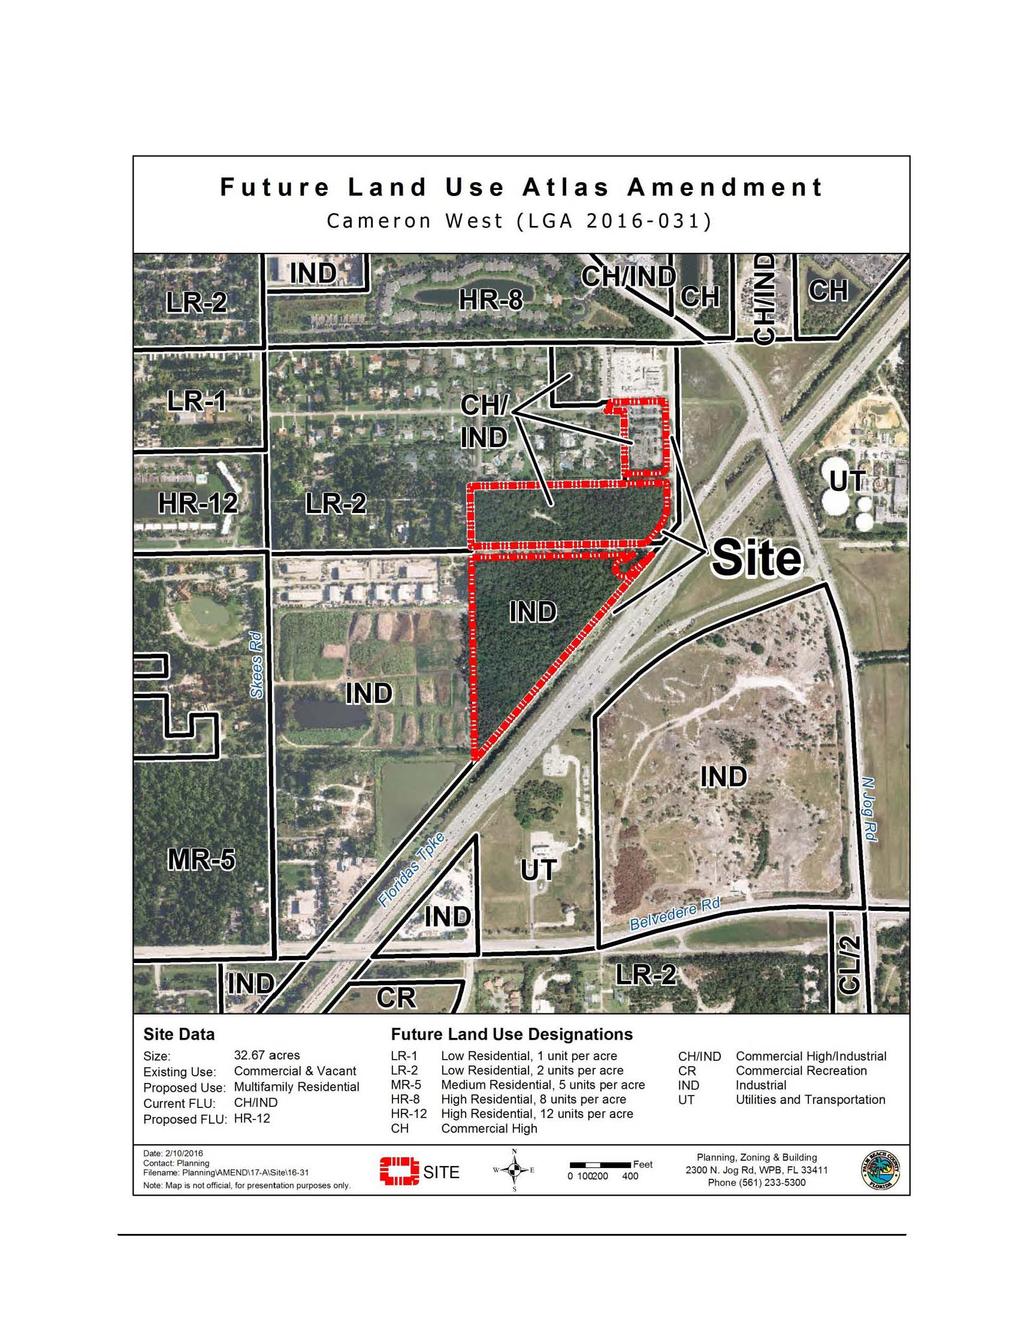 Future Land Use Atlas Amendment Cameron West (LGA 2016-031) Site Data Size: 32.